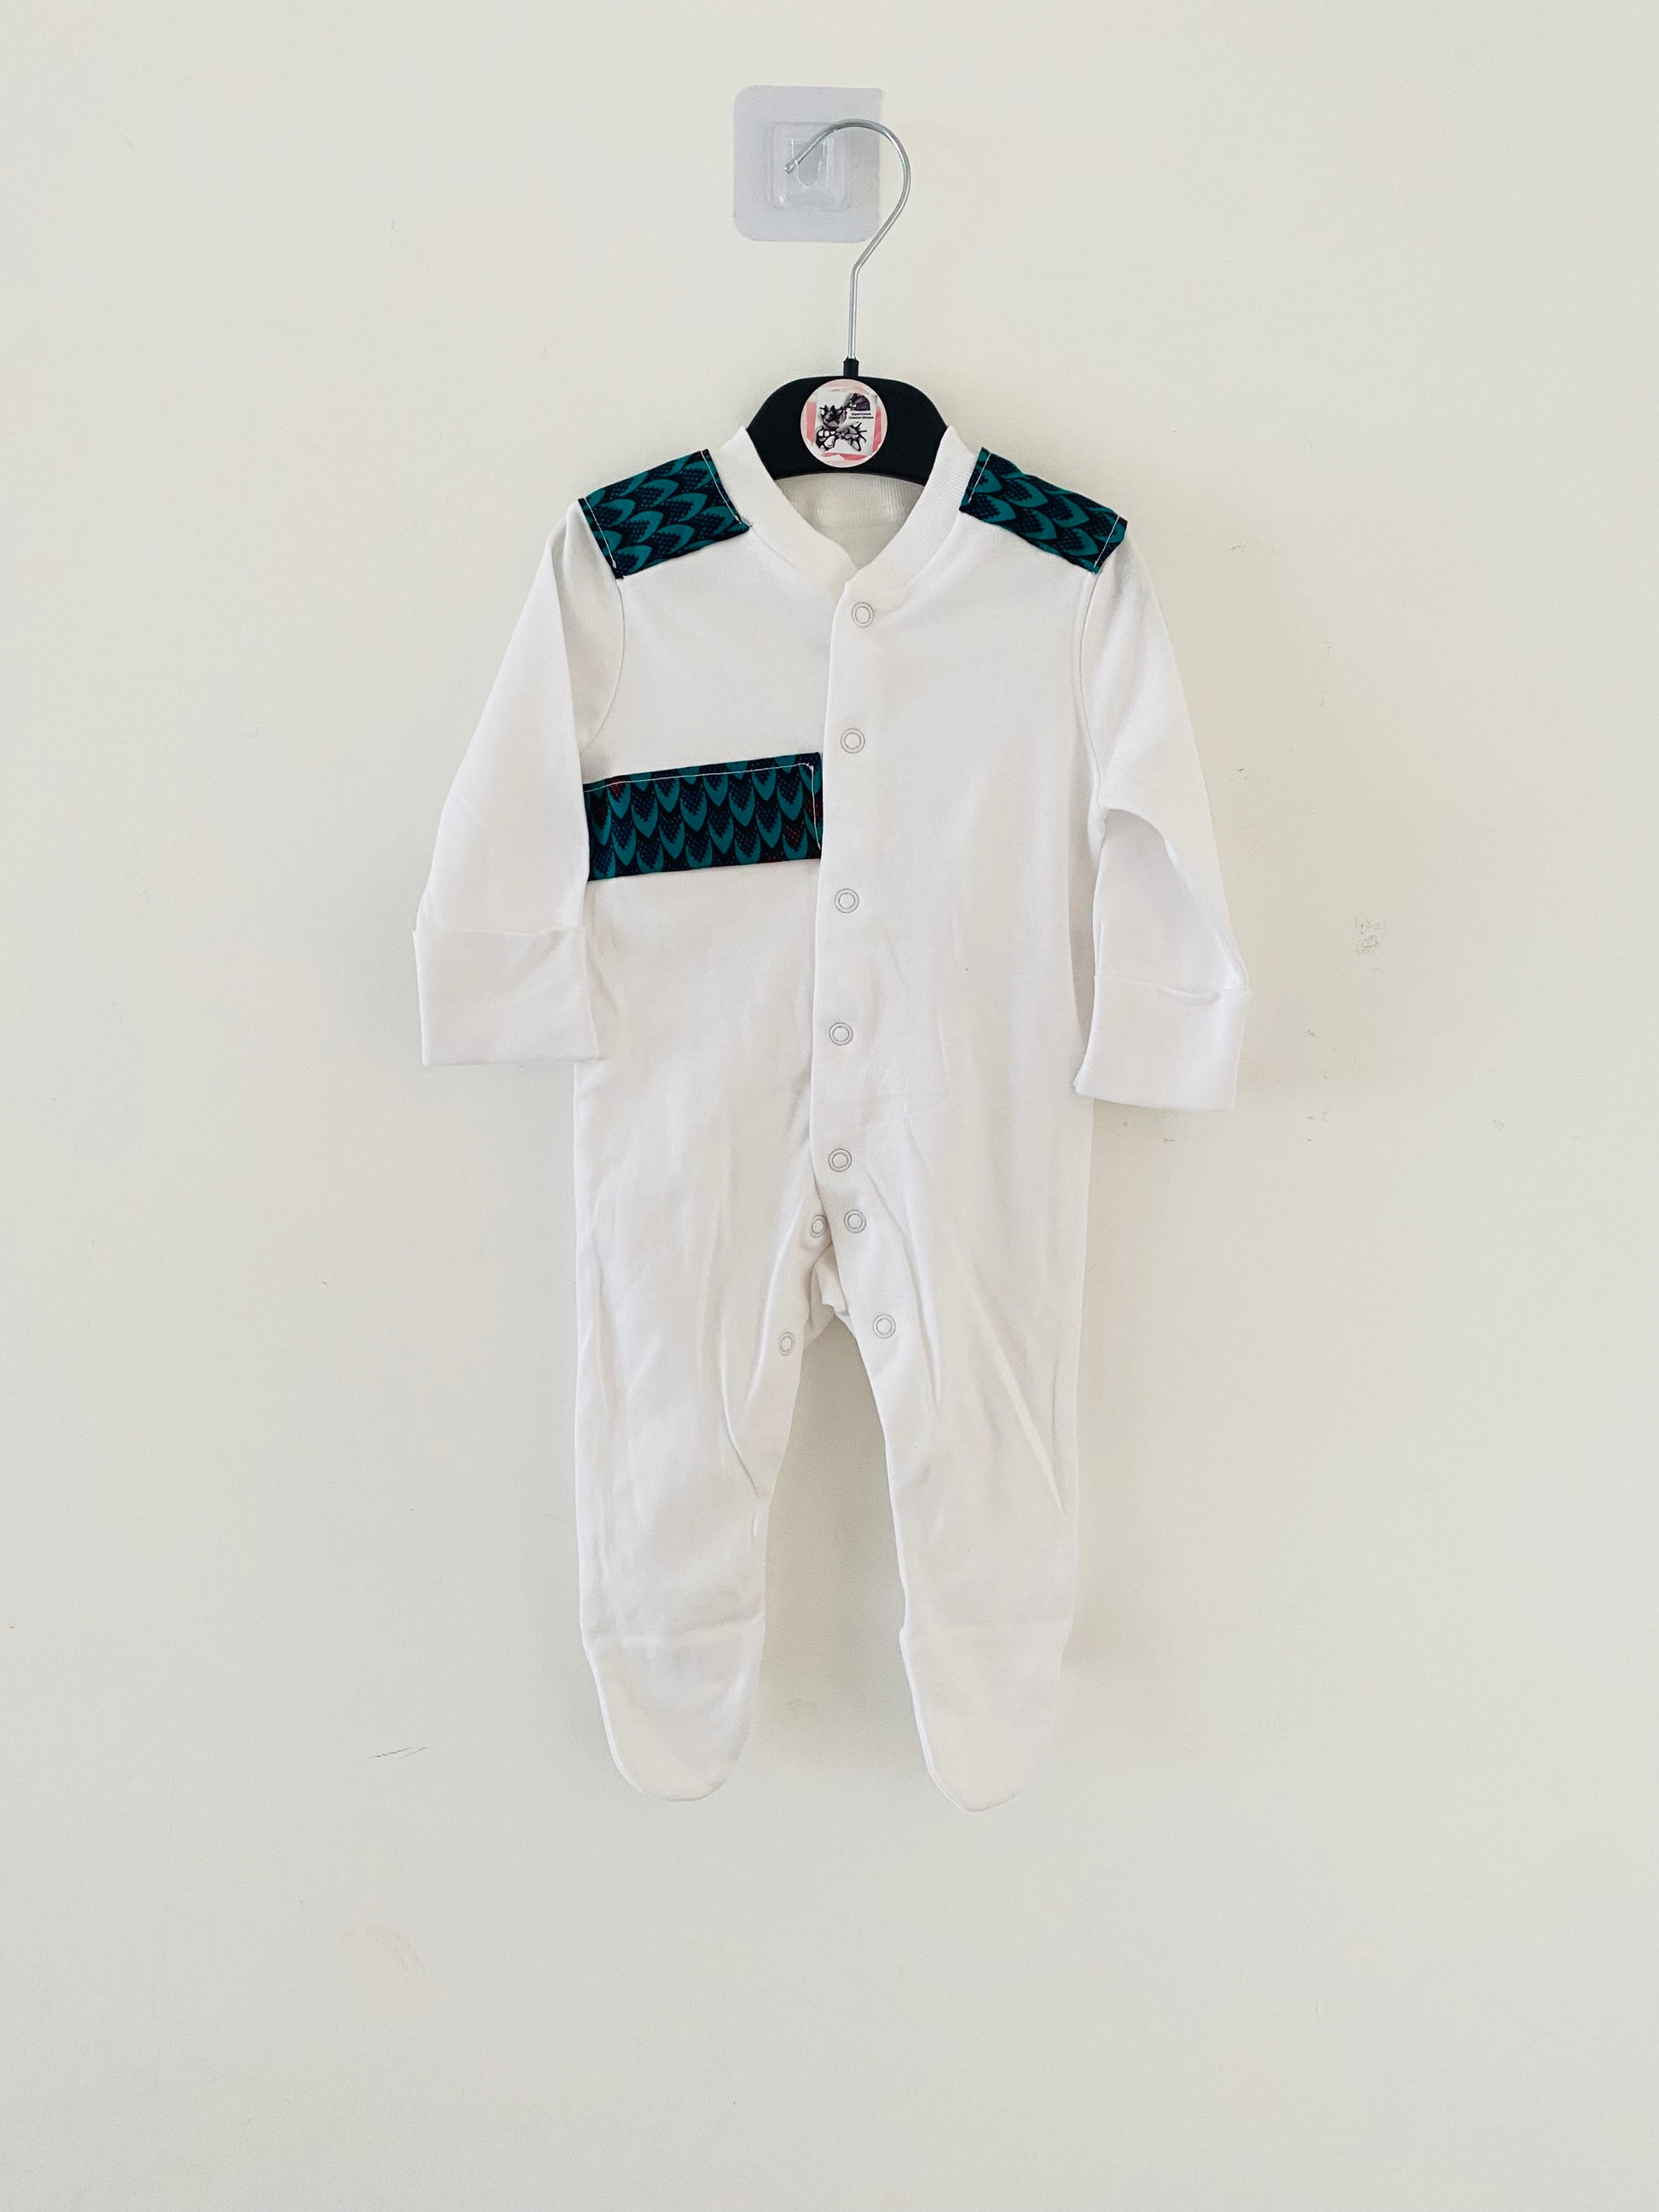 Pyjama garçon en tissu wax - tenue traditionnelle Bebe - cadeau naissance original